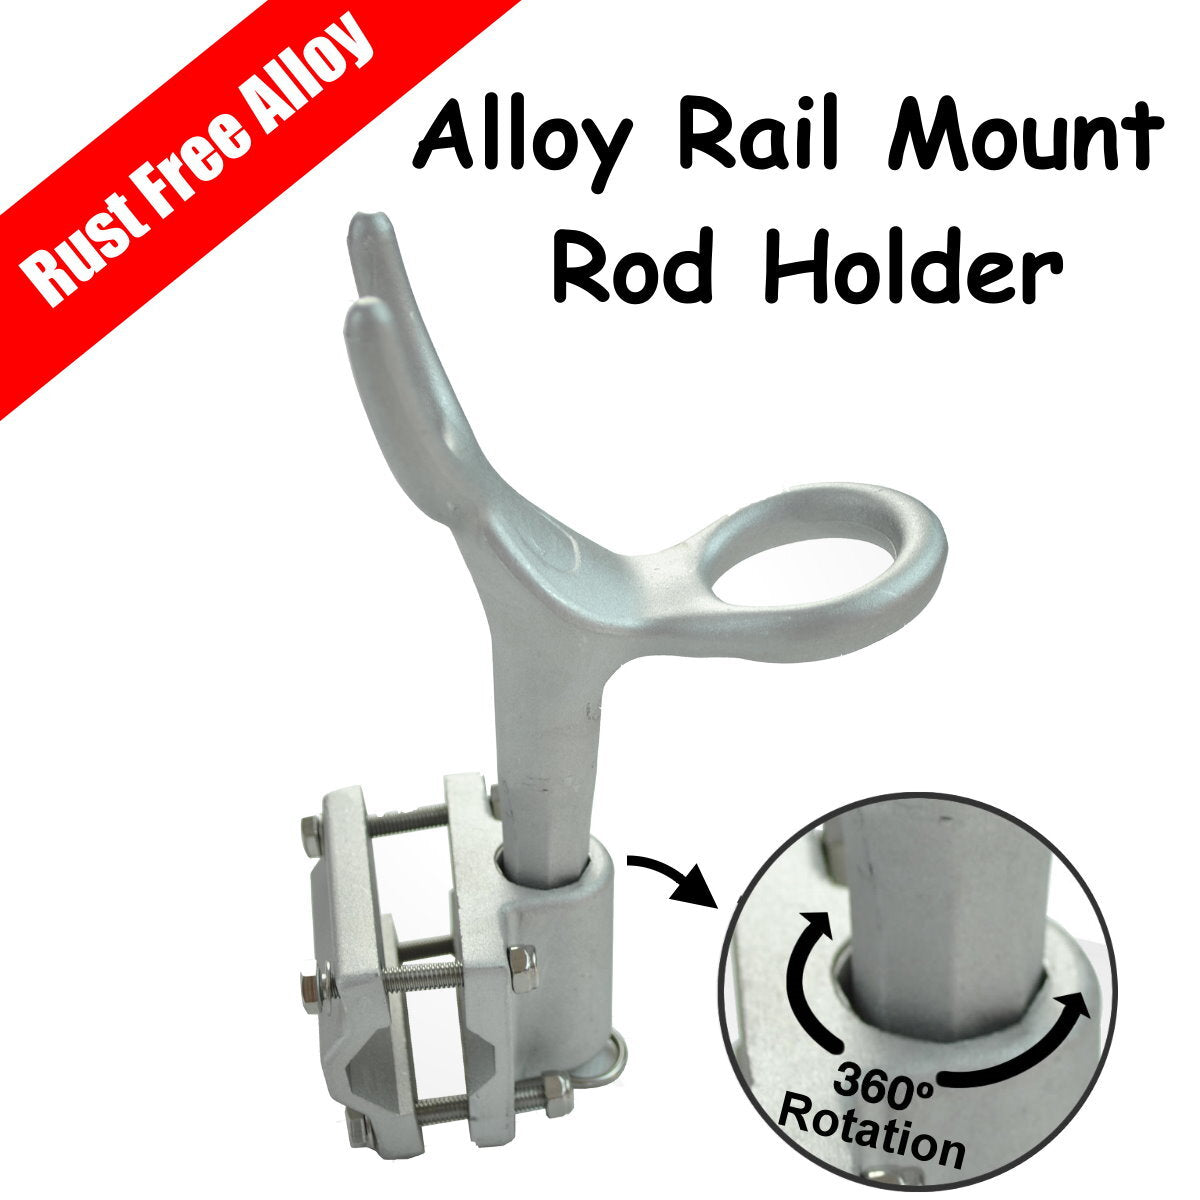 Alloy 360° rotation Adjustable RAIL MOUNT ROD Holder for fishing boat